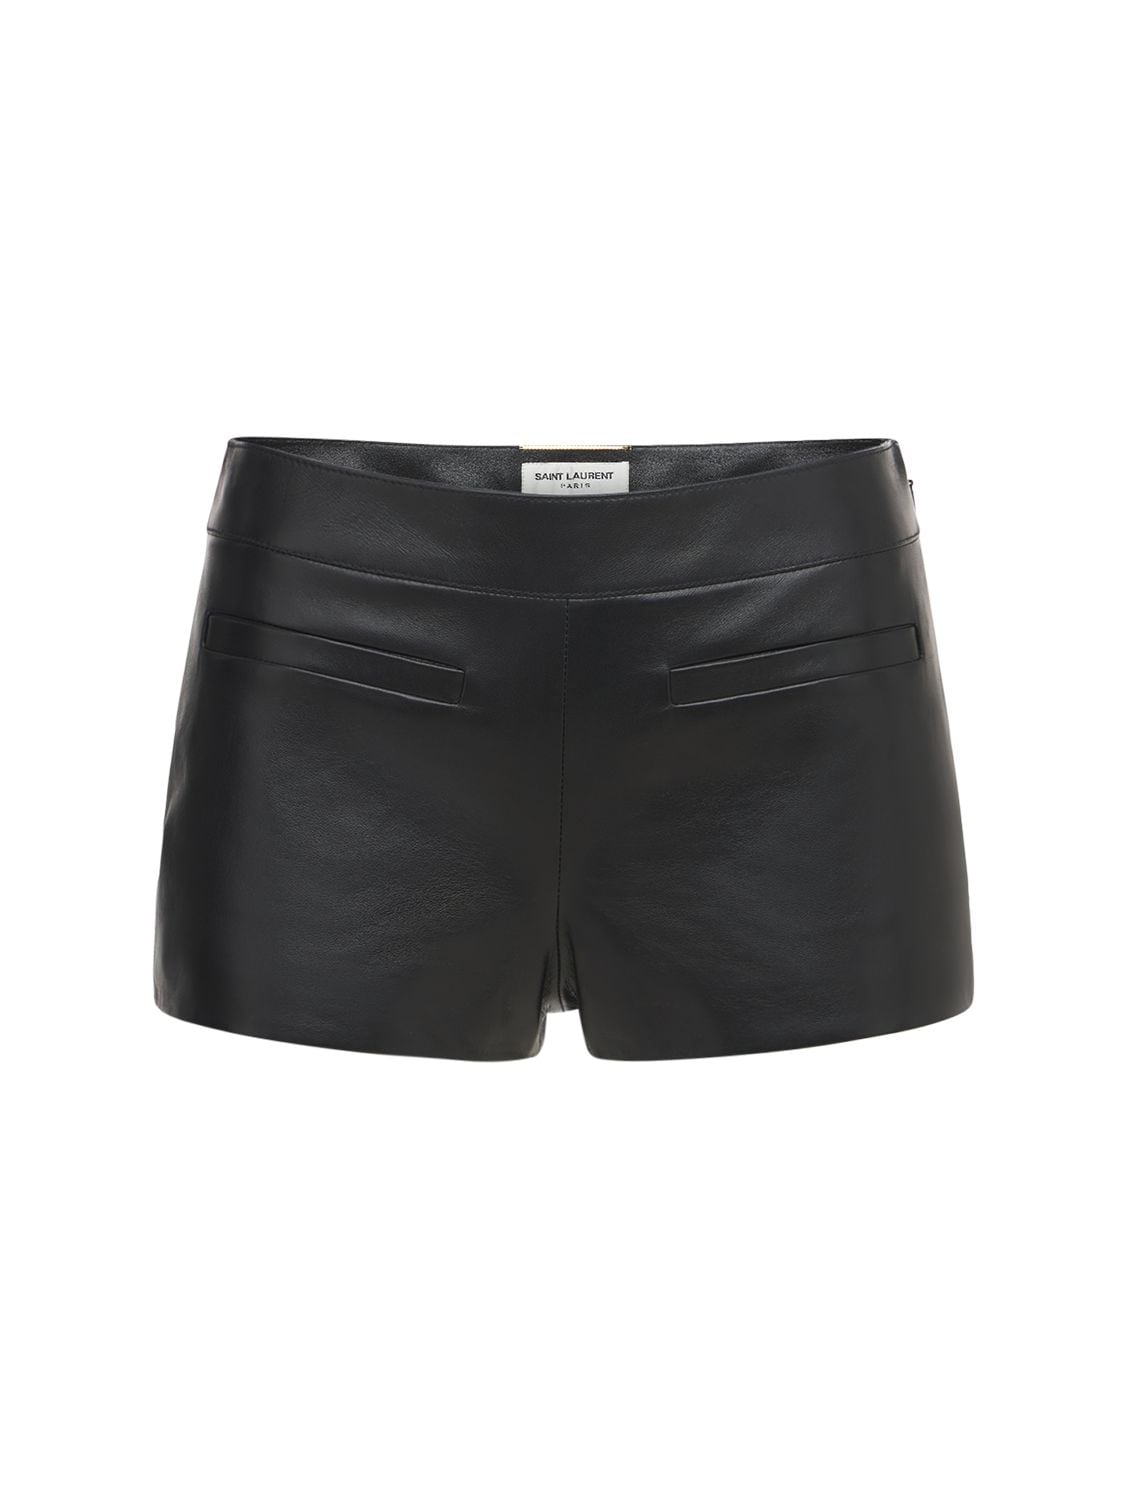 SAINT LAURENT Leather Mini Shorts